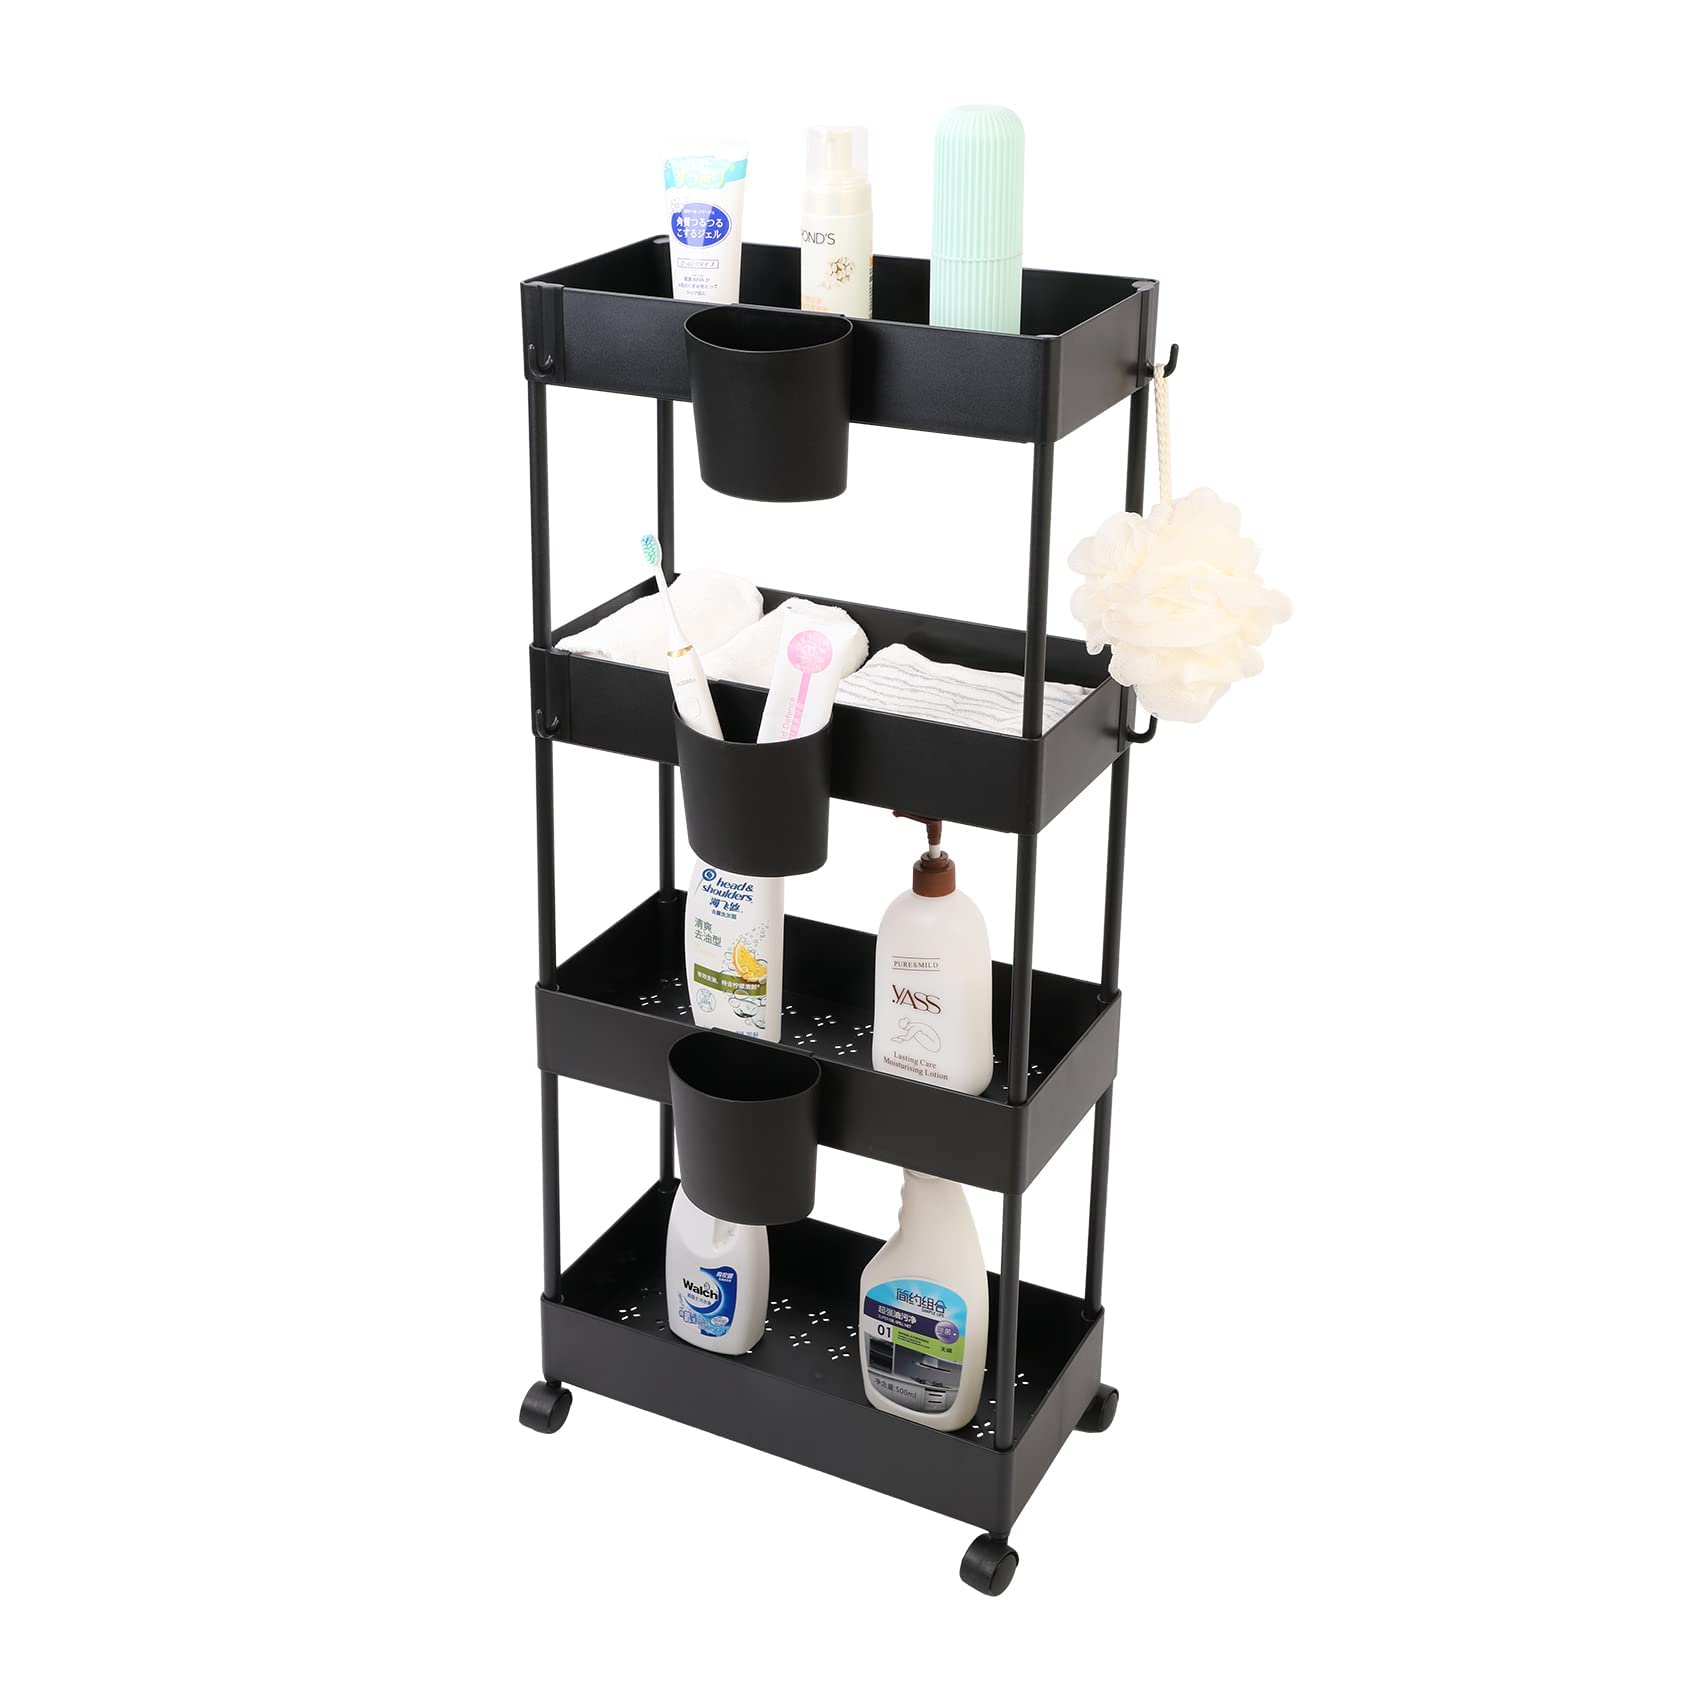 JAKAGO 6-Pack Little Hanging Bucket - Hanging Cup Holder for Rolling Cart Shelf Wall Storage Box for Kitchen Living Room Bathroom Desktop Cleaning Trash Can(Black)